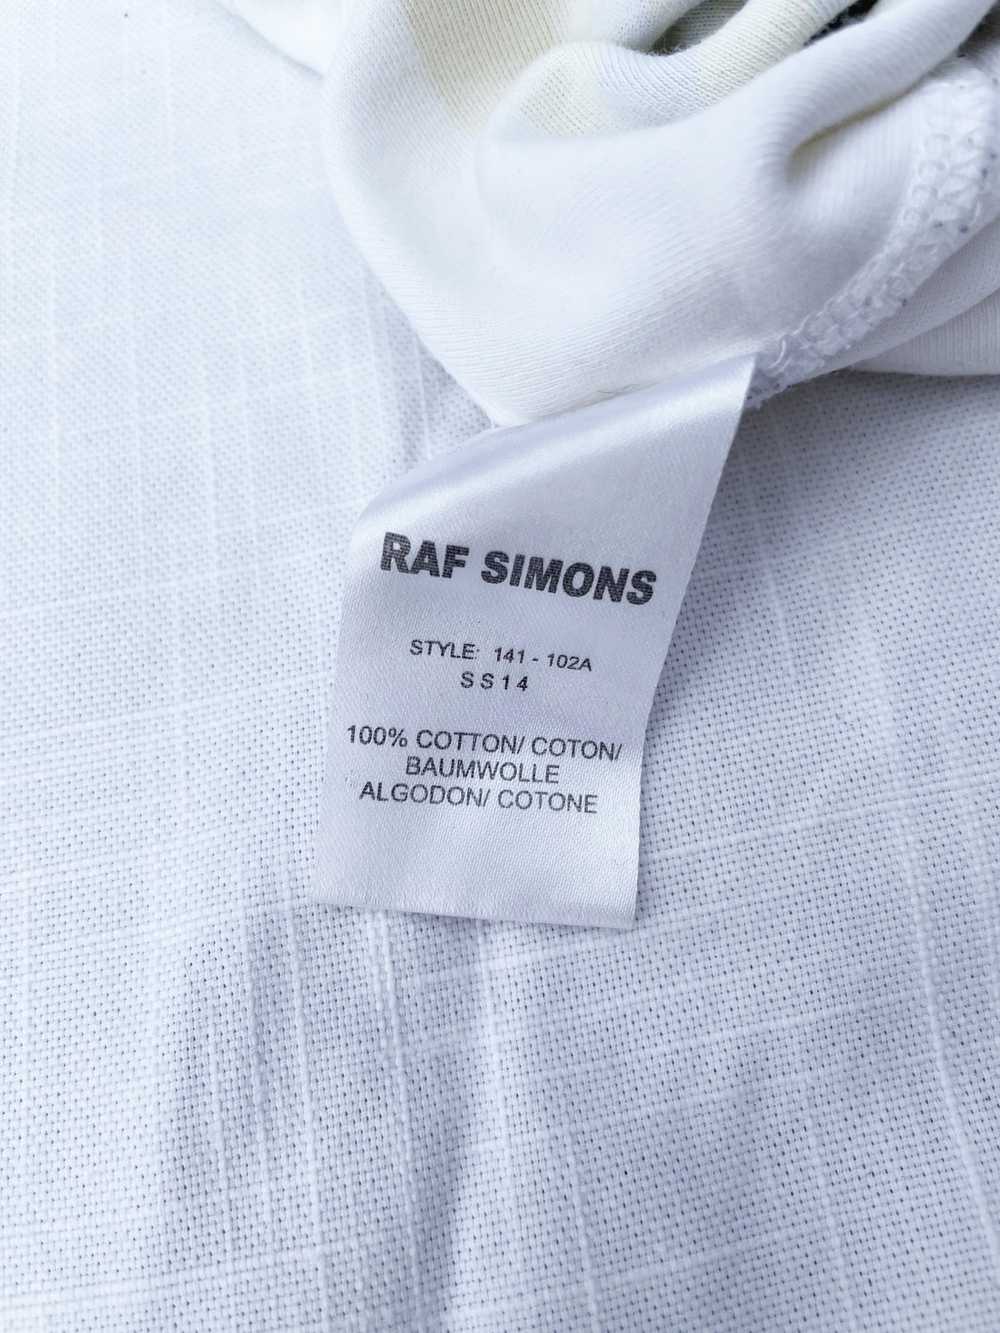 Raf Simons Raf Simmons Ss14 So Good And So Many T… - image 6